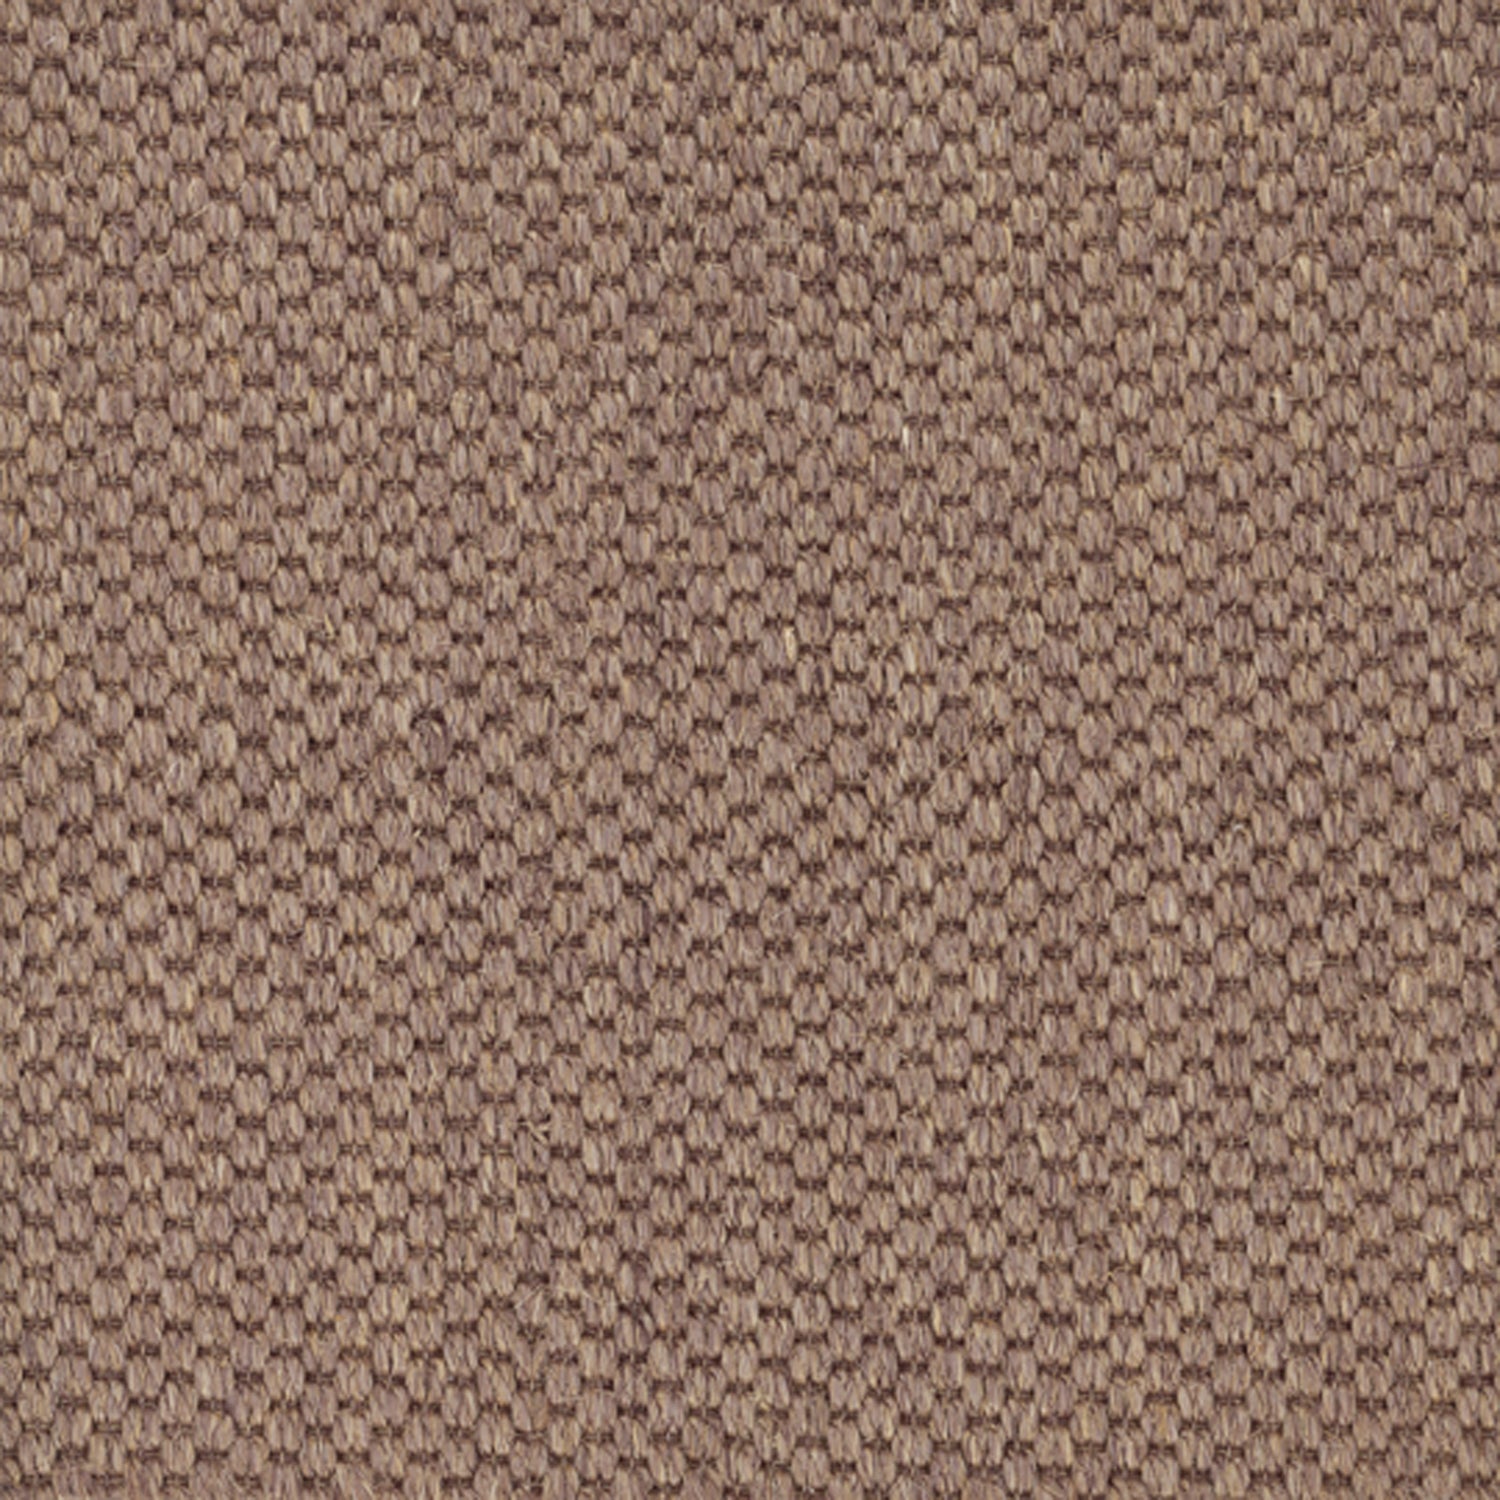 Sisal broadloom carpet swatch in a chunky grid weave in dark mauve and brown.